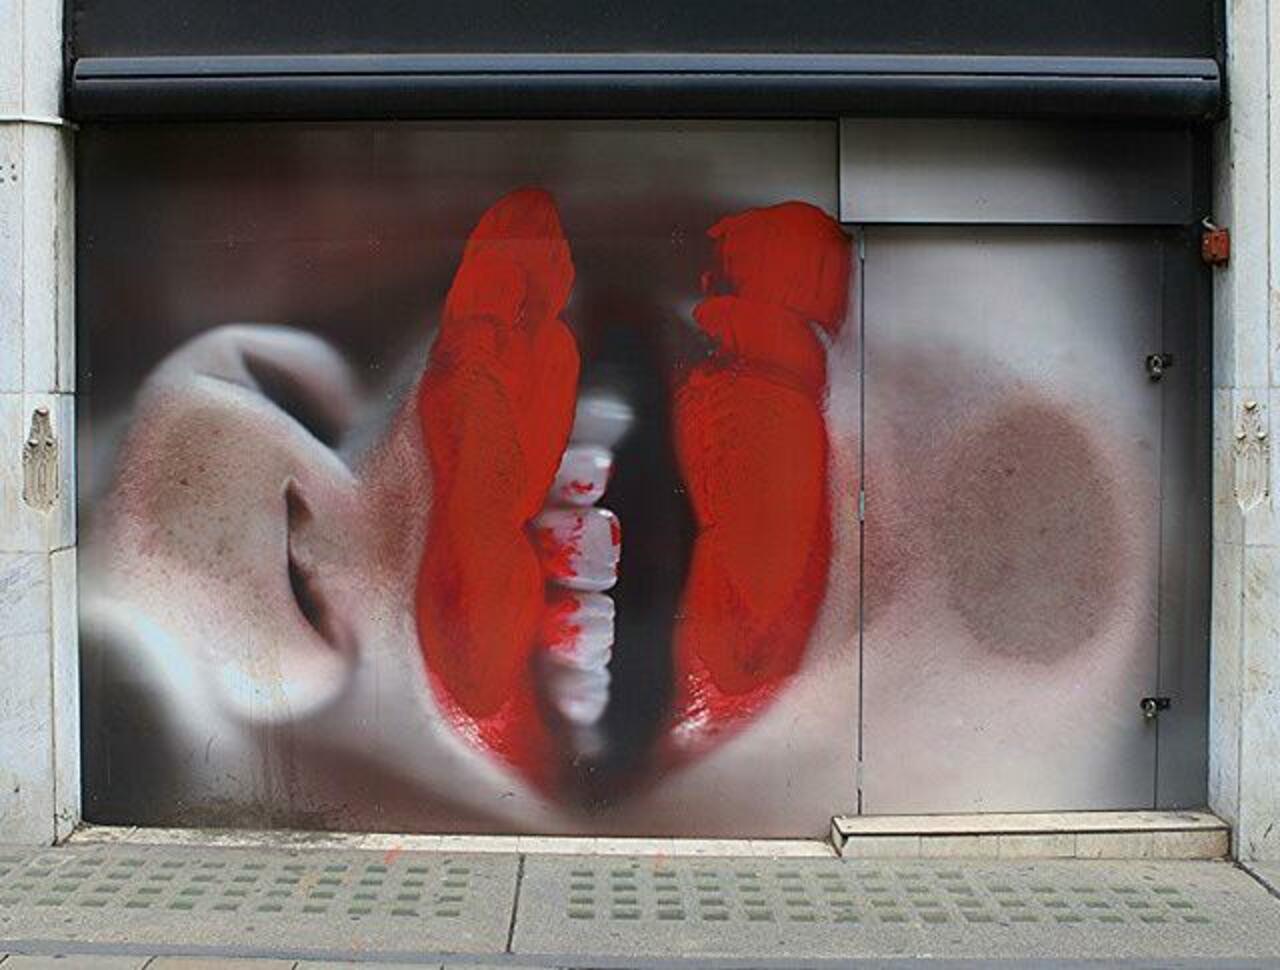 RT @GoogleStreetArt: Street Art by Isamaya Ffrench 

#art #arte #graffiti #streetart http://t.co/DJG9UJW7tB